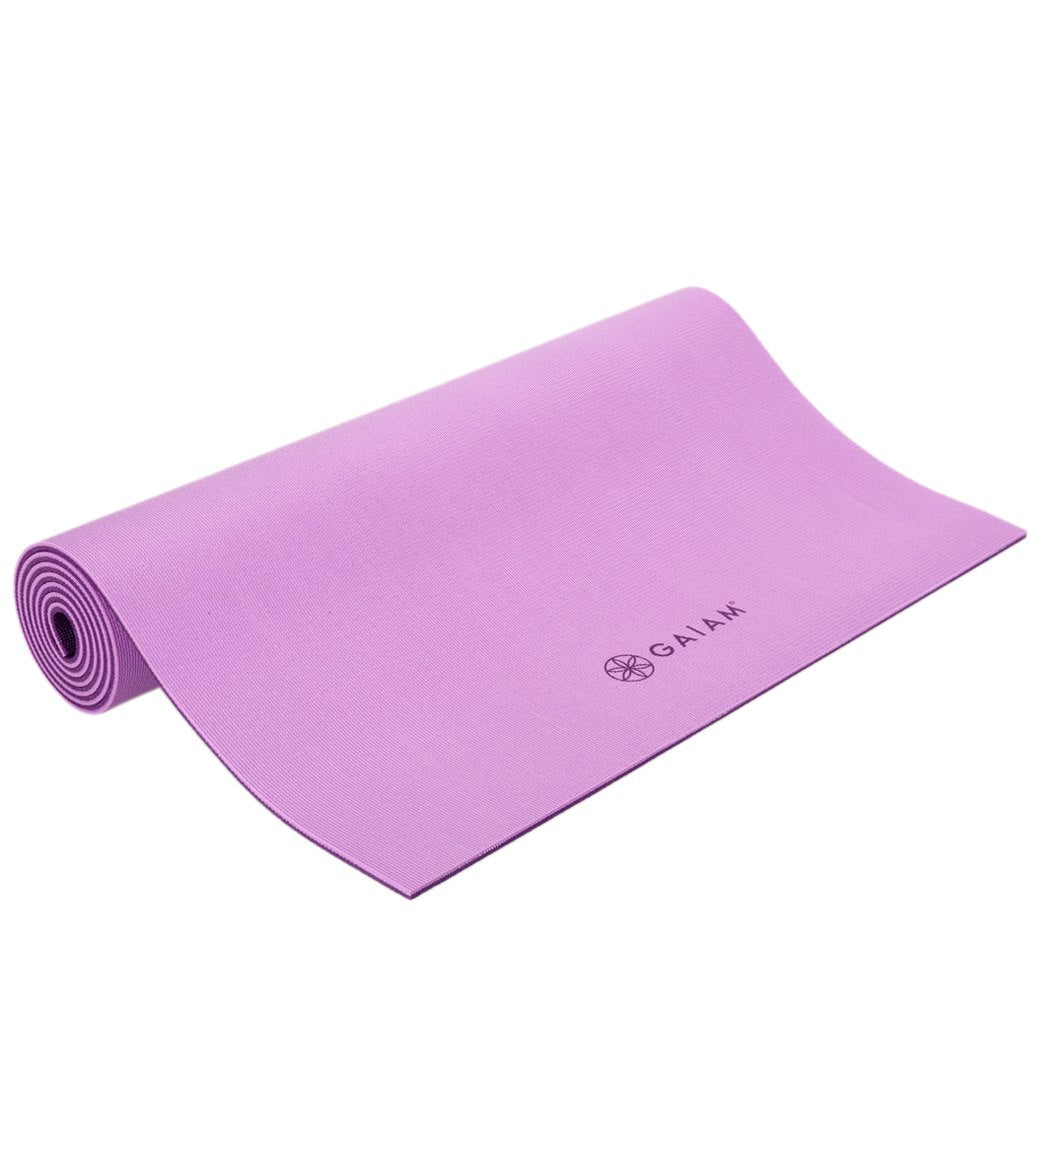 Gaiam Dry Grip Yoga Mat — JAXOutdoorGearFarmandRanch